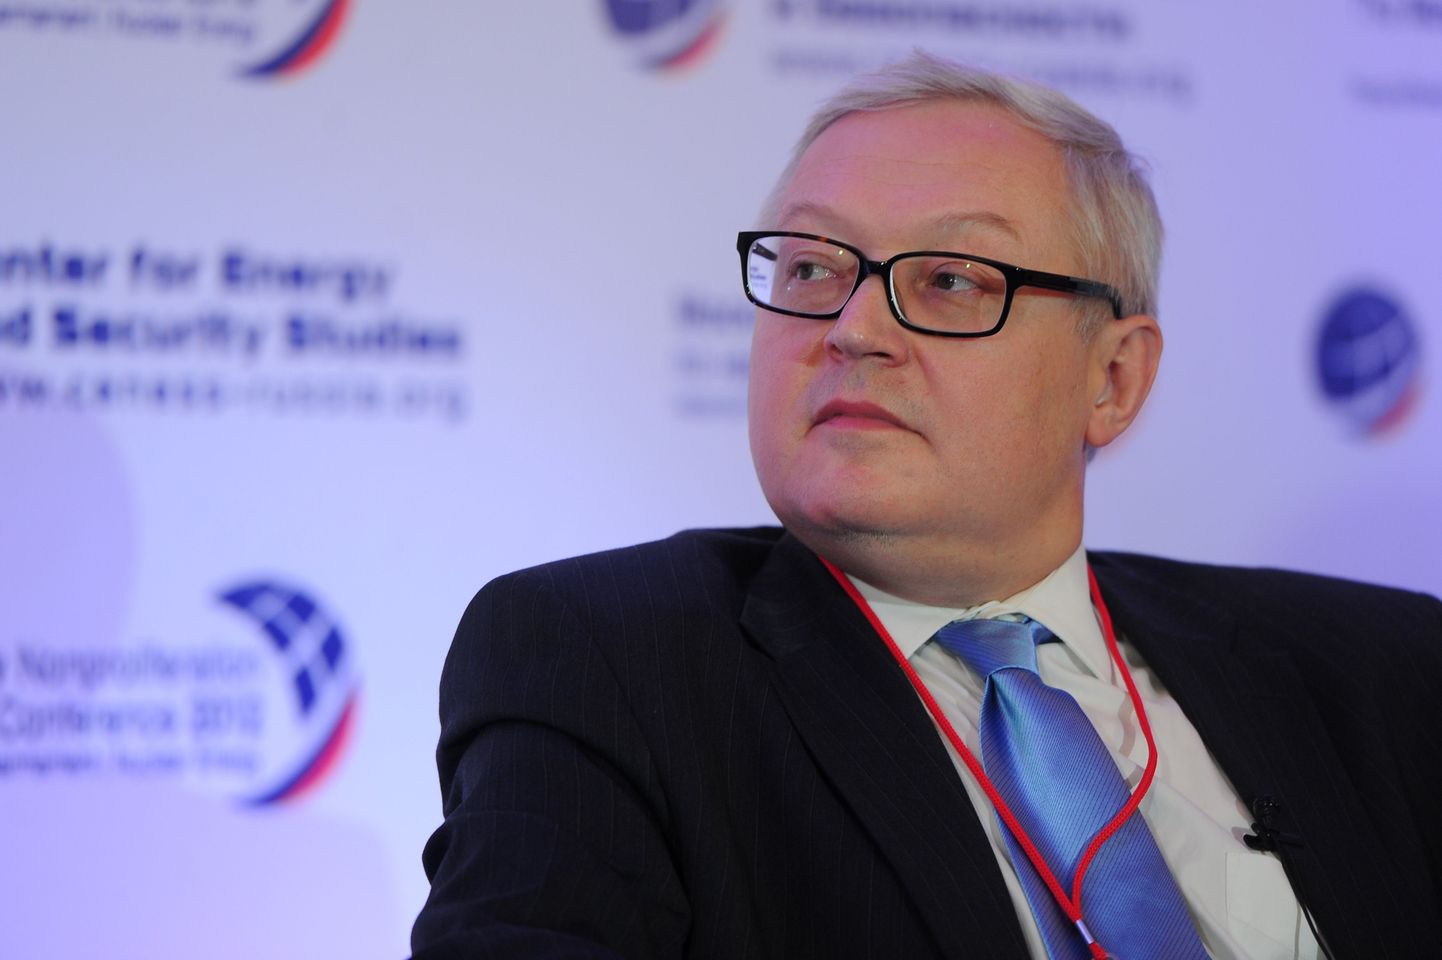 Venemaa asevälisminister Sergei Rjabkov